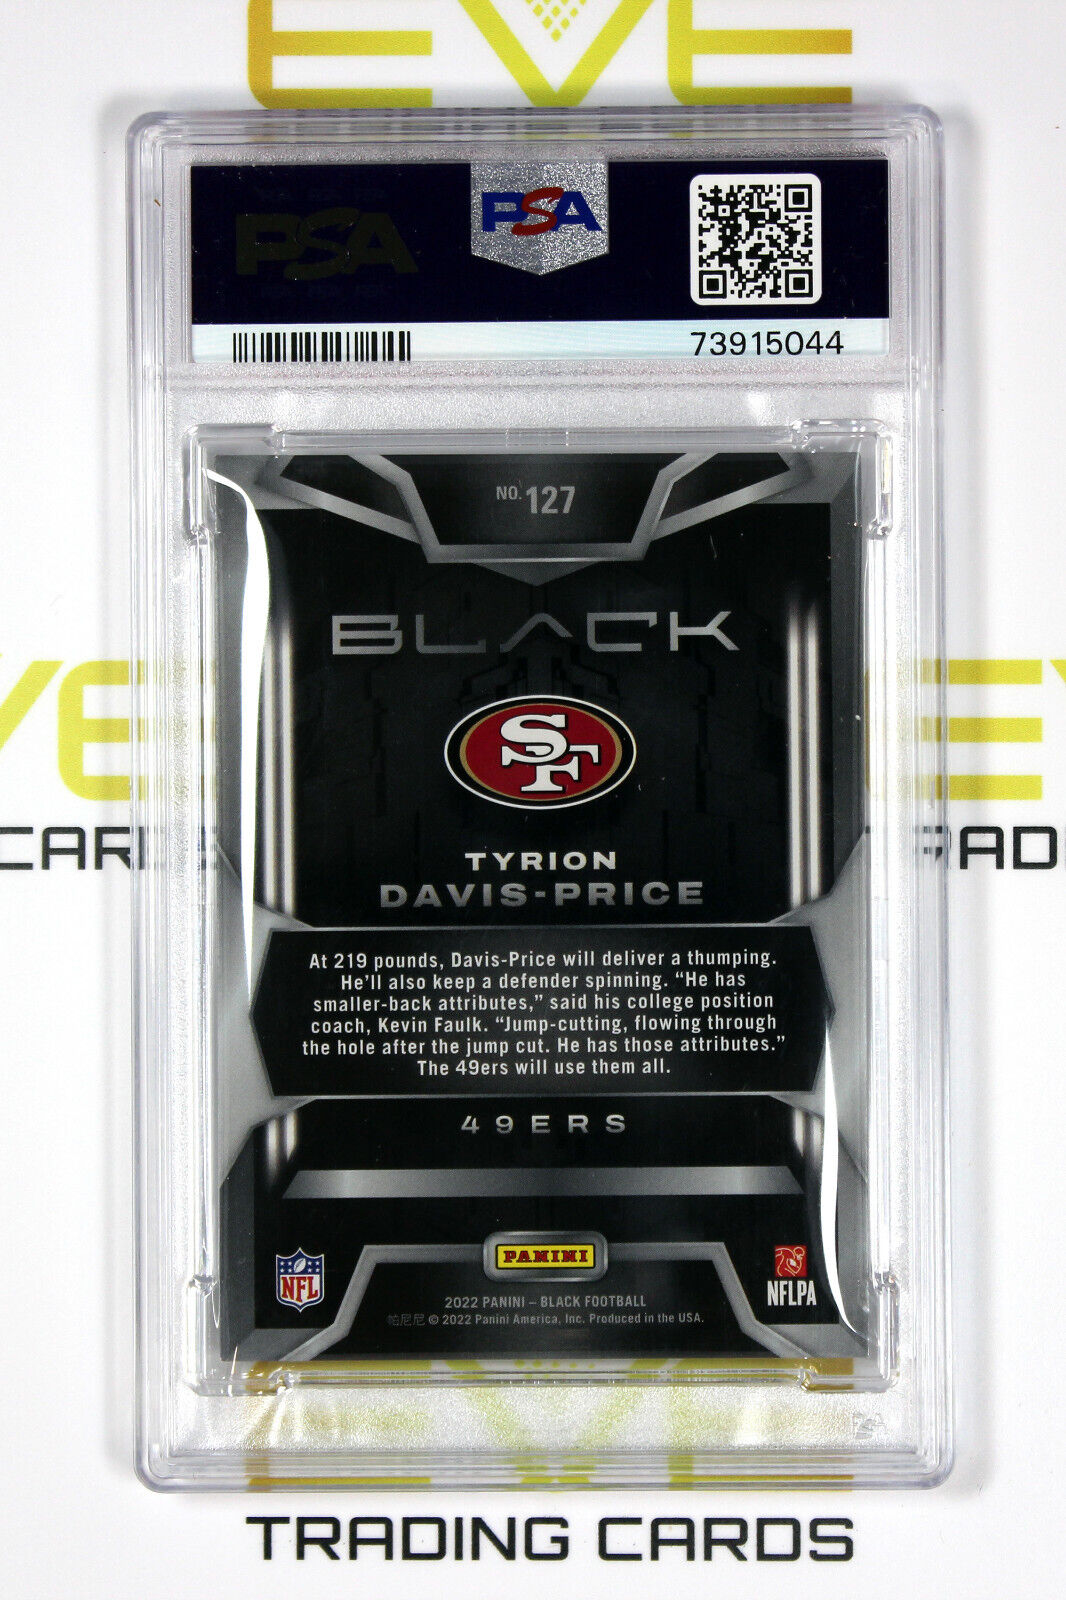 2022 Panini Black NFL Card #127 Tyrion Davis-Price Gold /5 - PSA 8